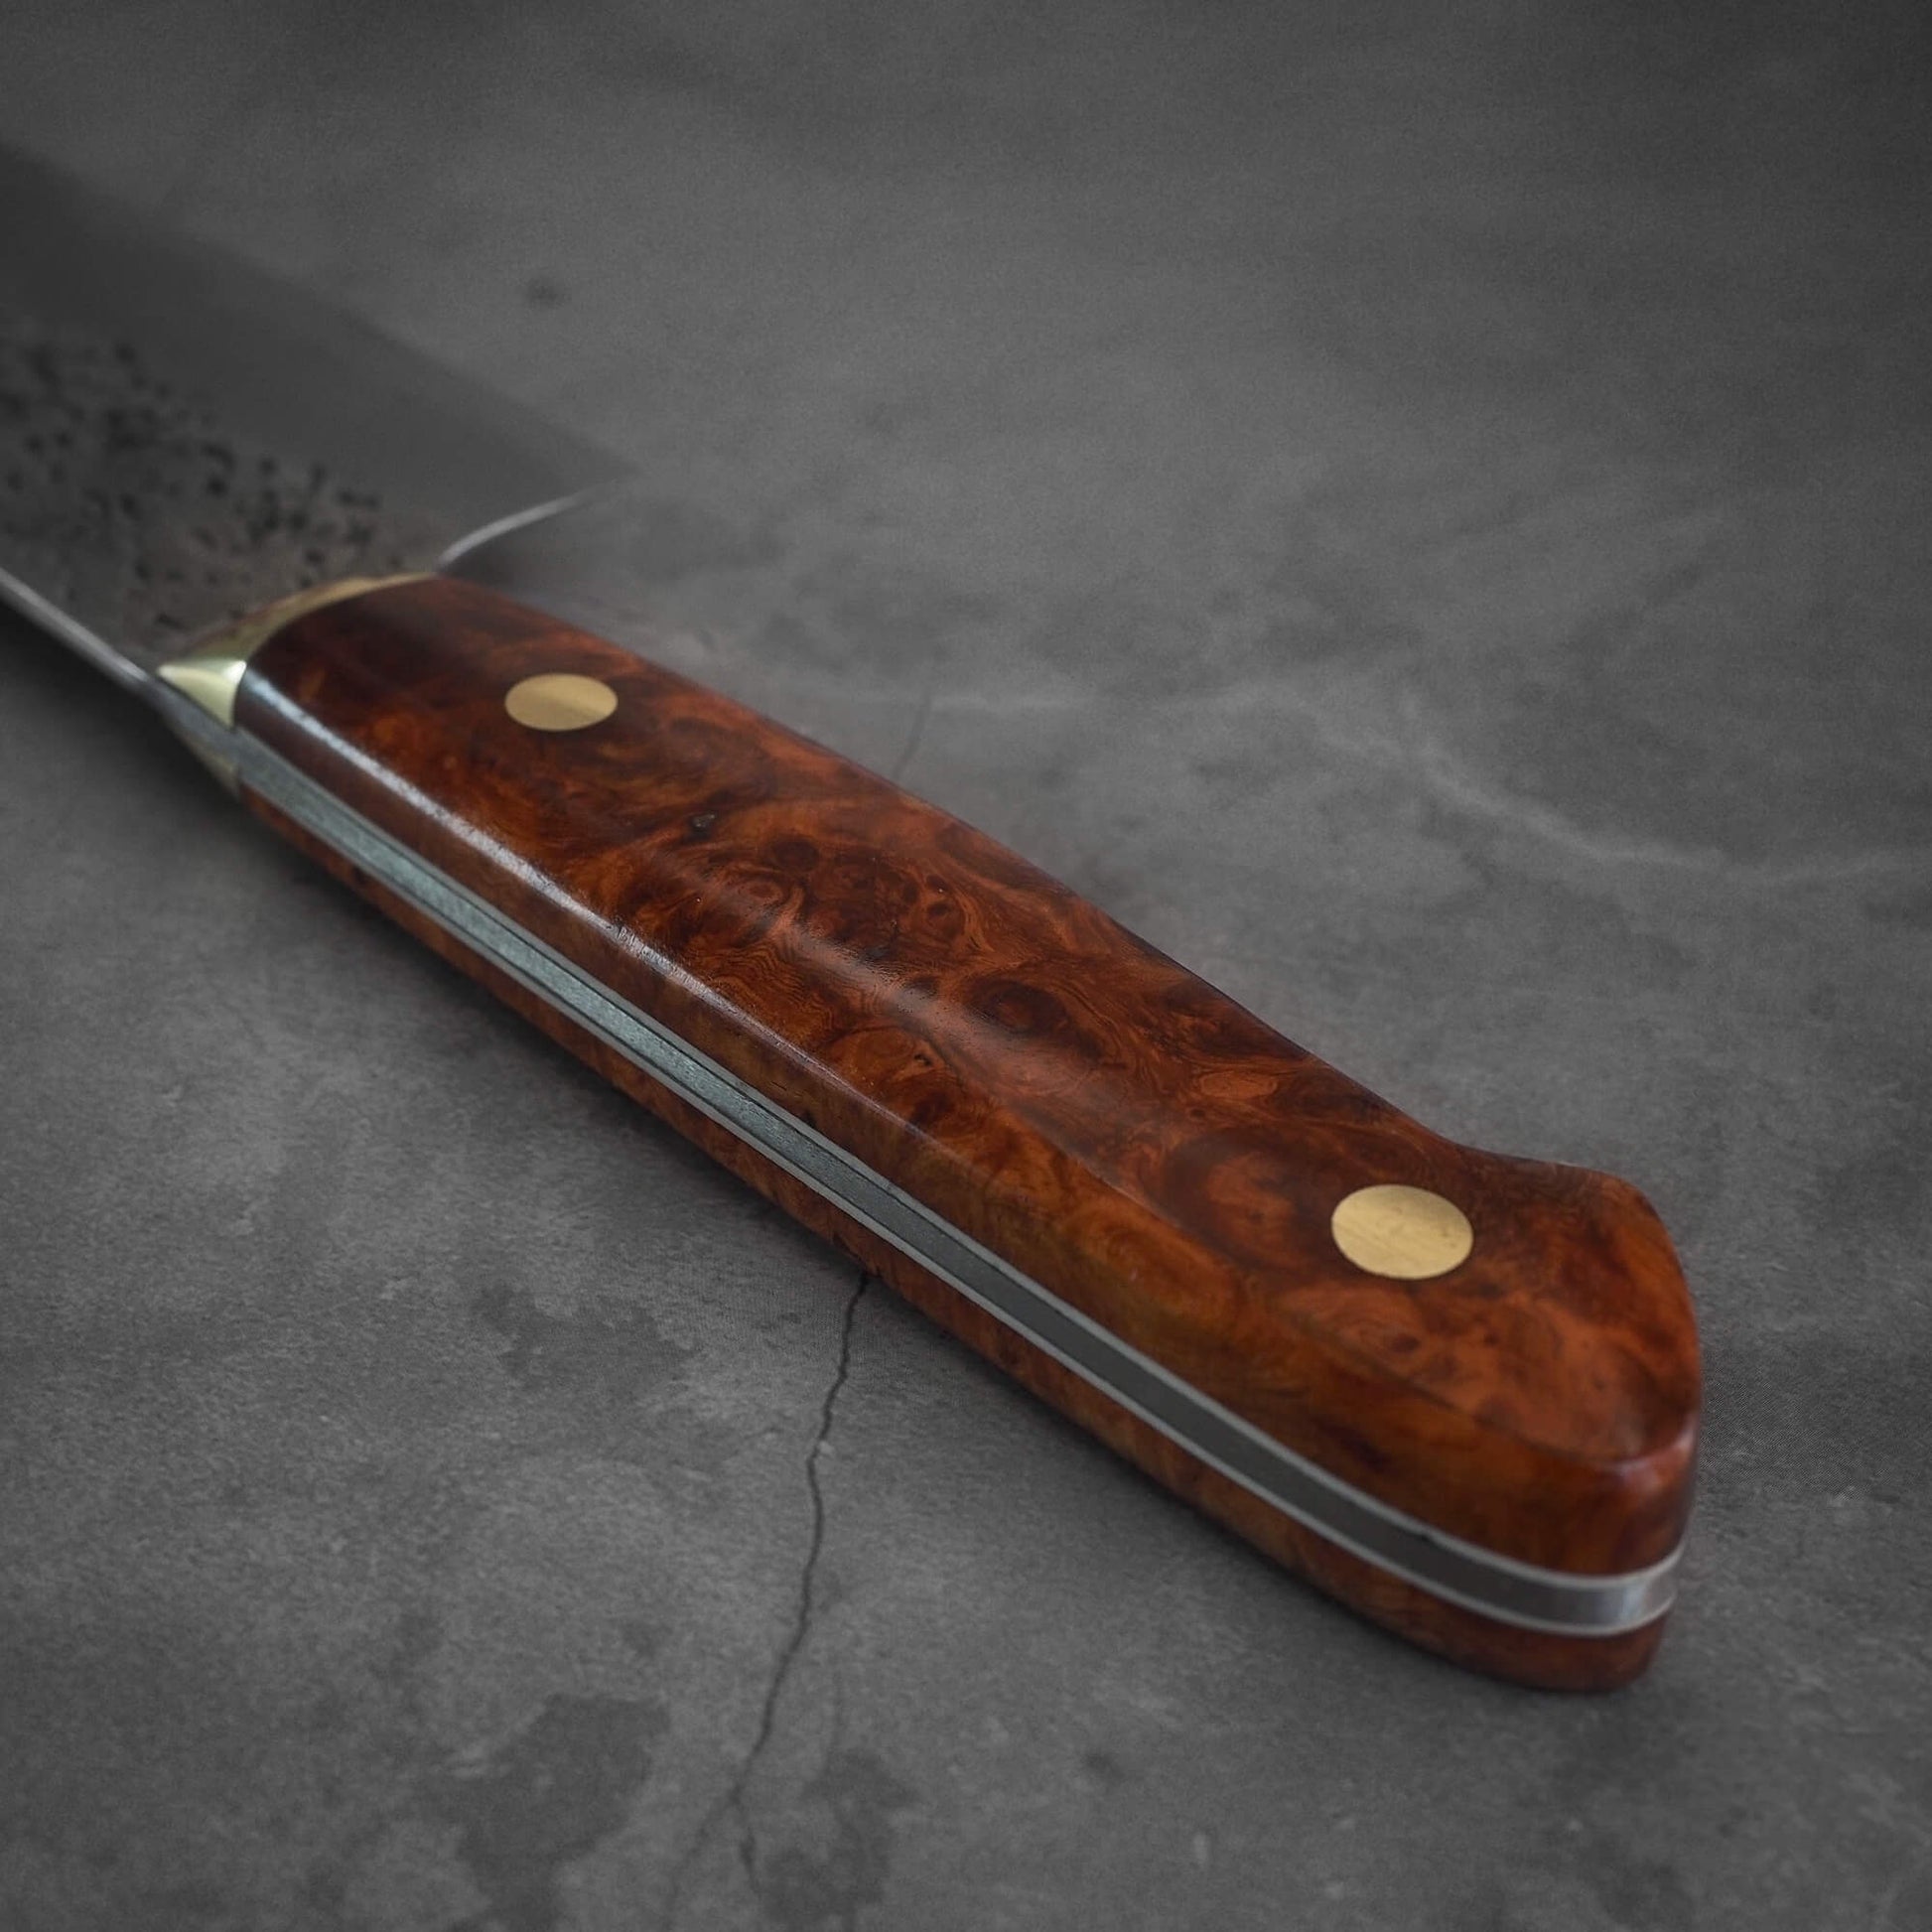 An angled view and close up shot of the handle of a 220mm Kisuke Manaka tsuchime honwarikomi shirogami#2 gyuto knife